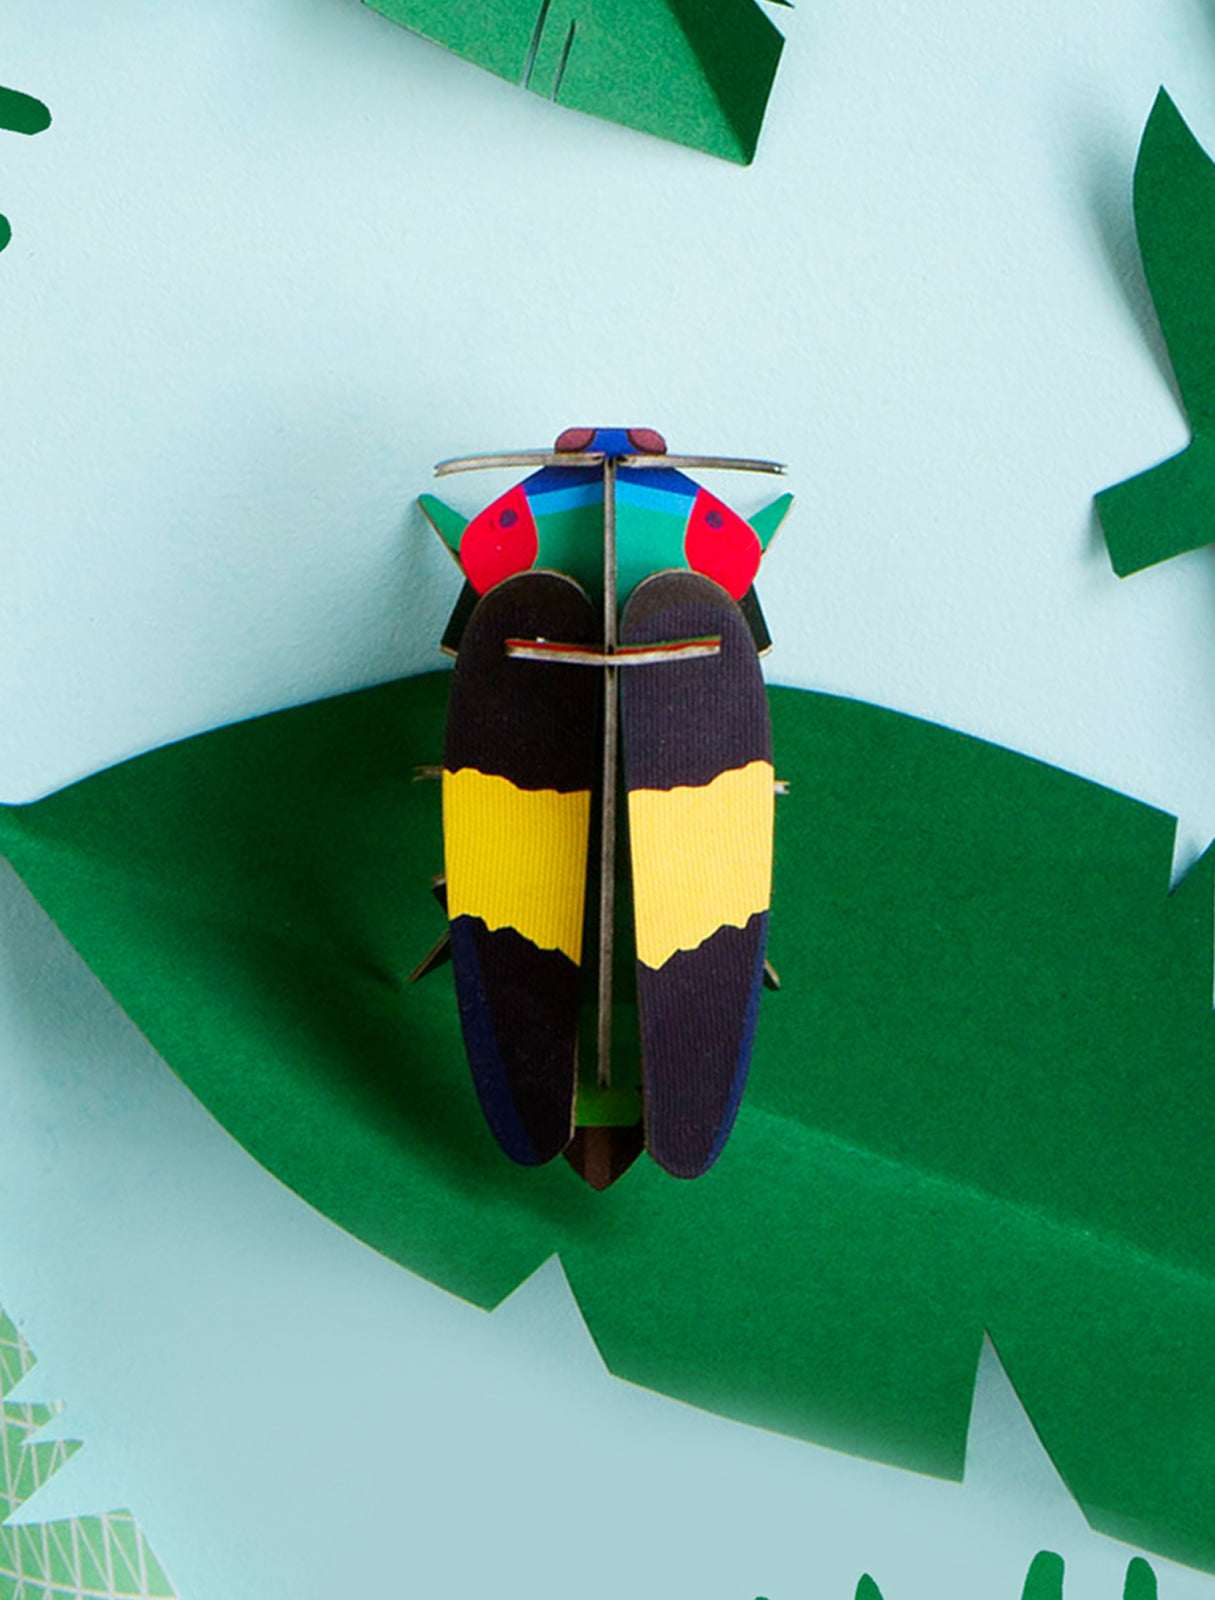 Studio ROOF Insects - Jewel Beetle